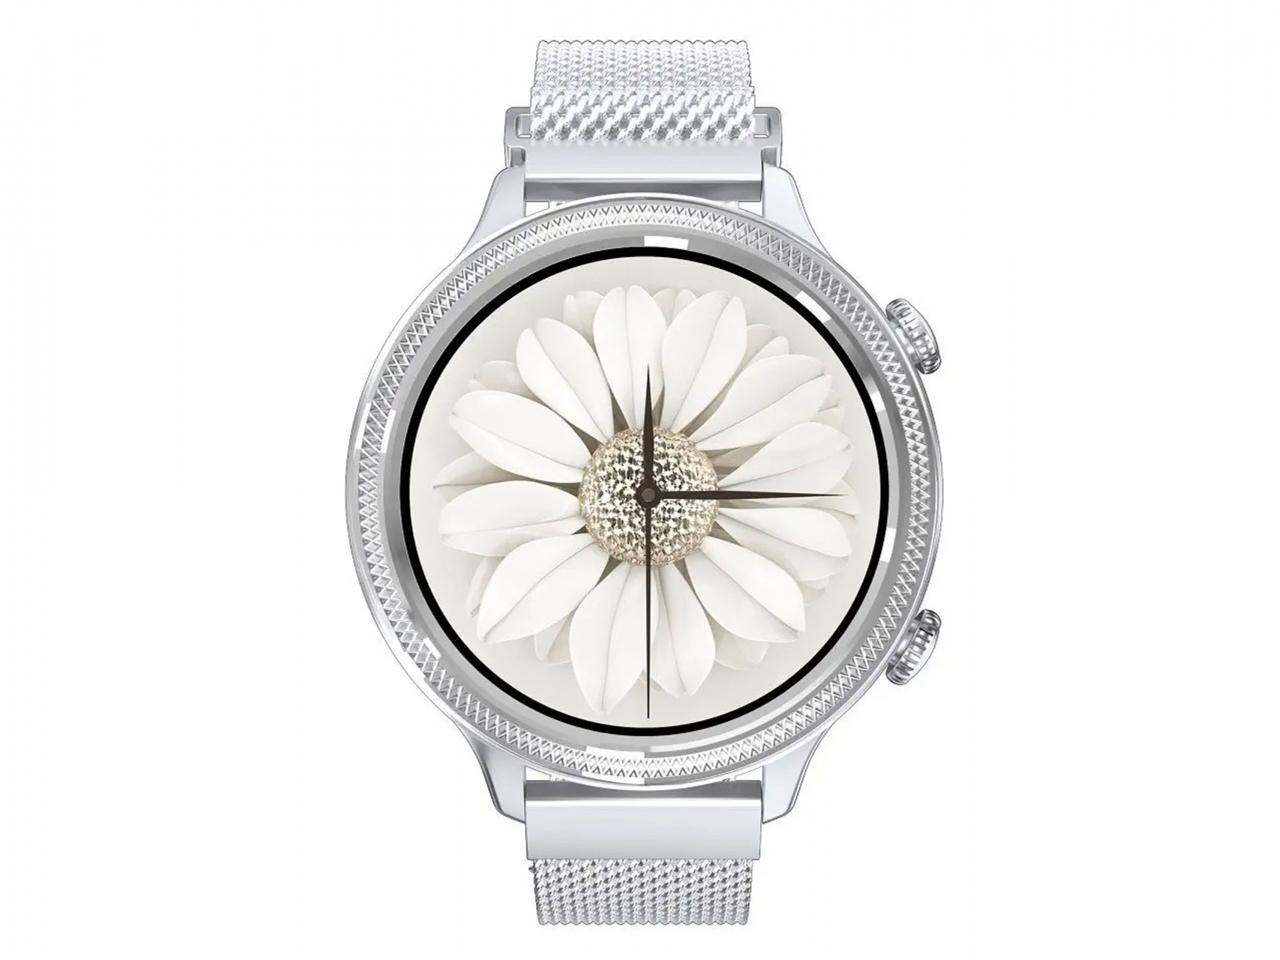 Chytré hodinky CARNEO Gear+ Deluxe, stříbrné